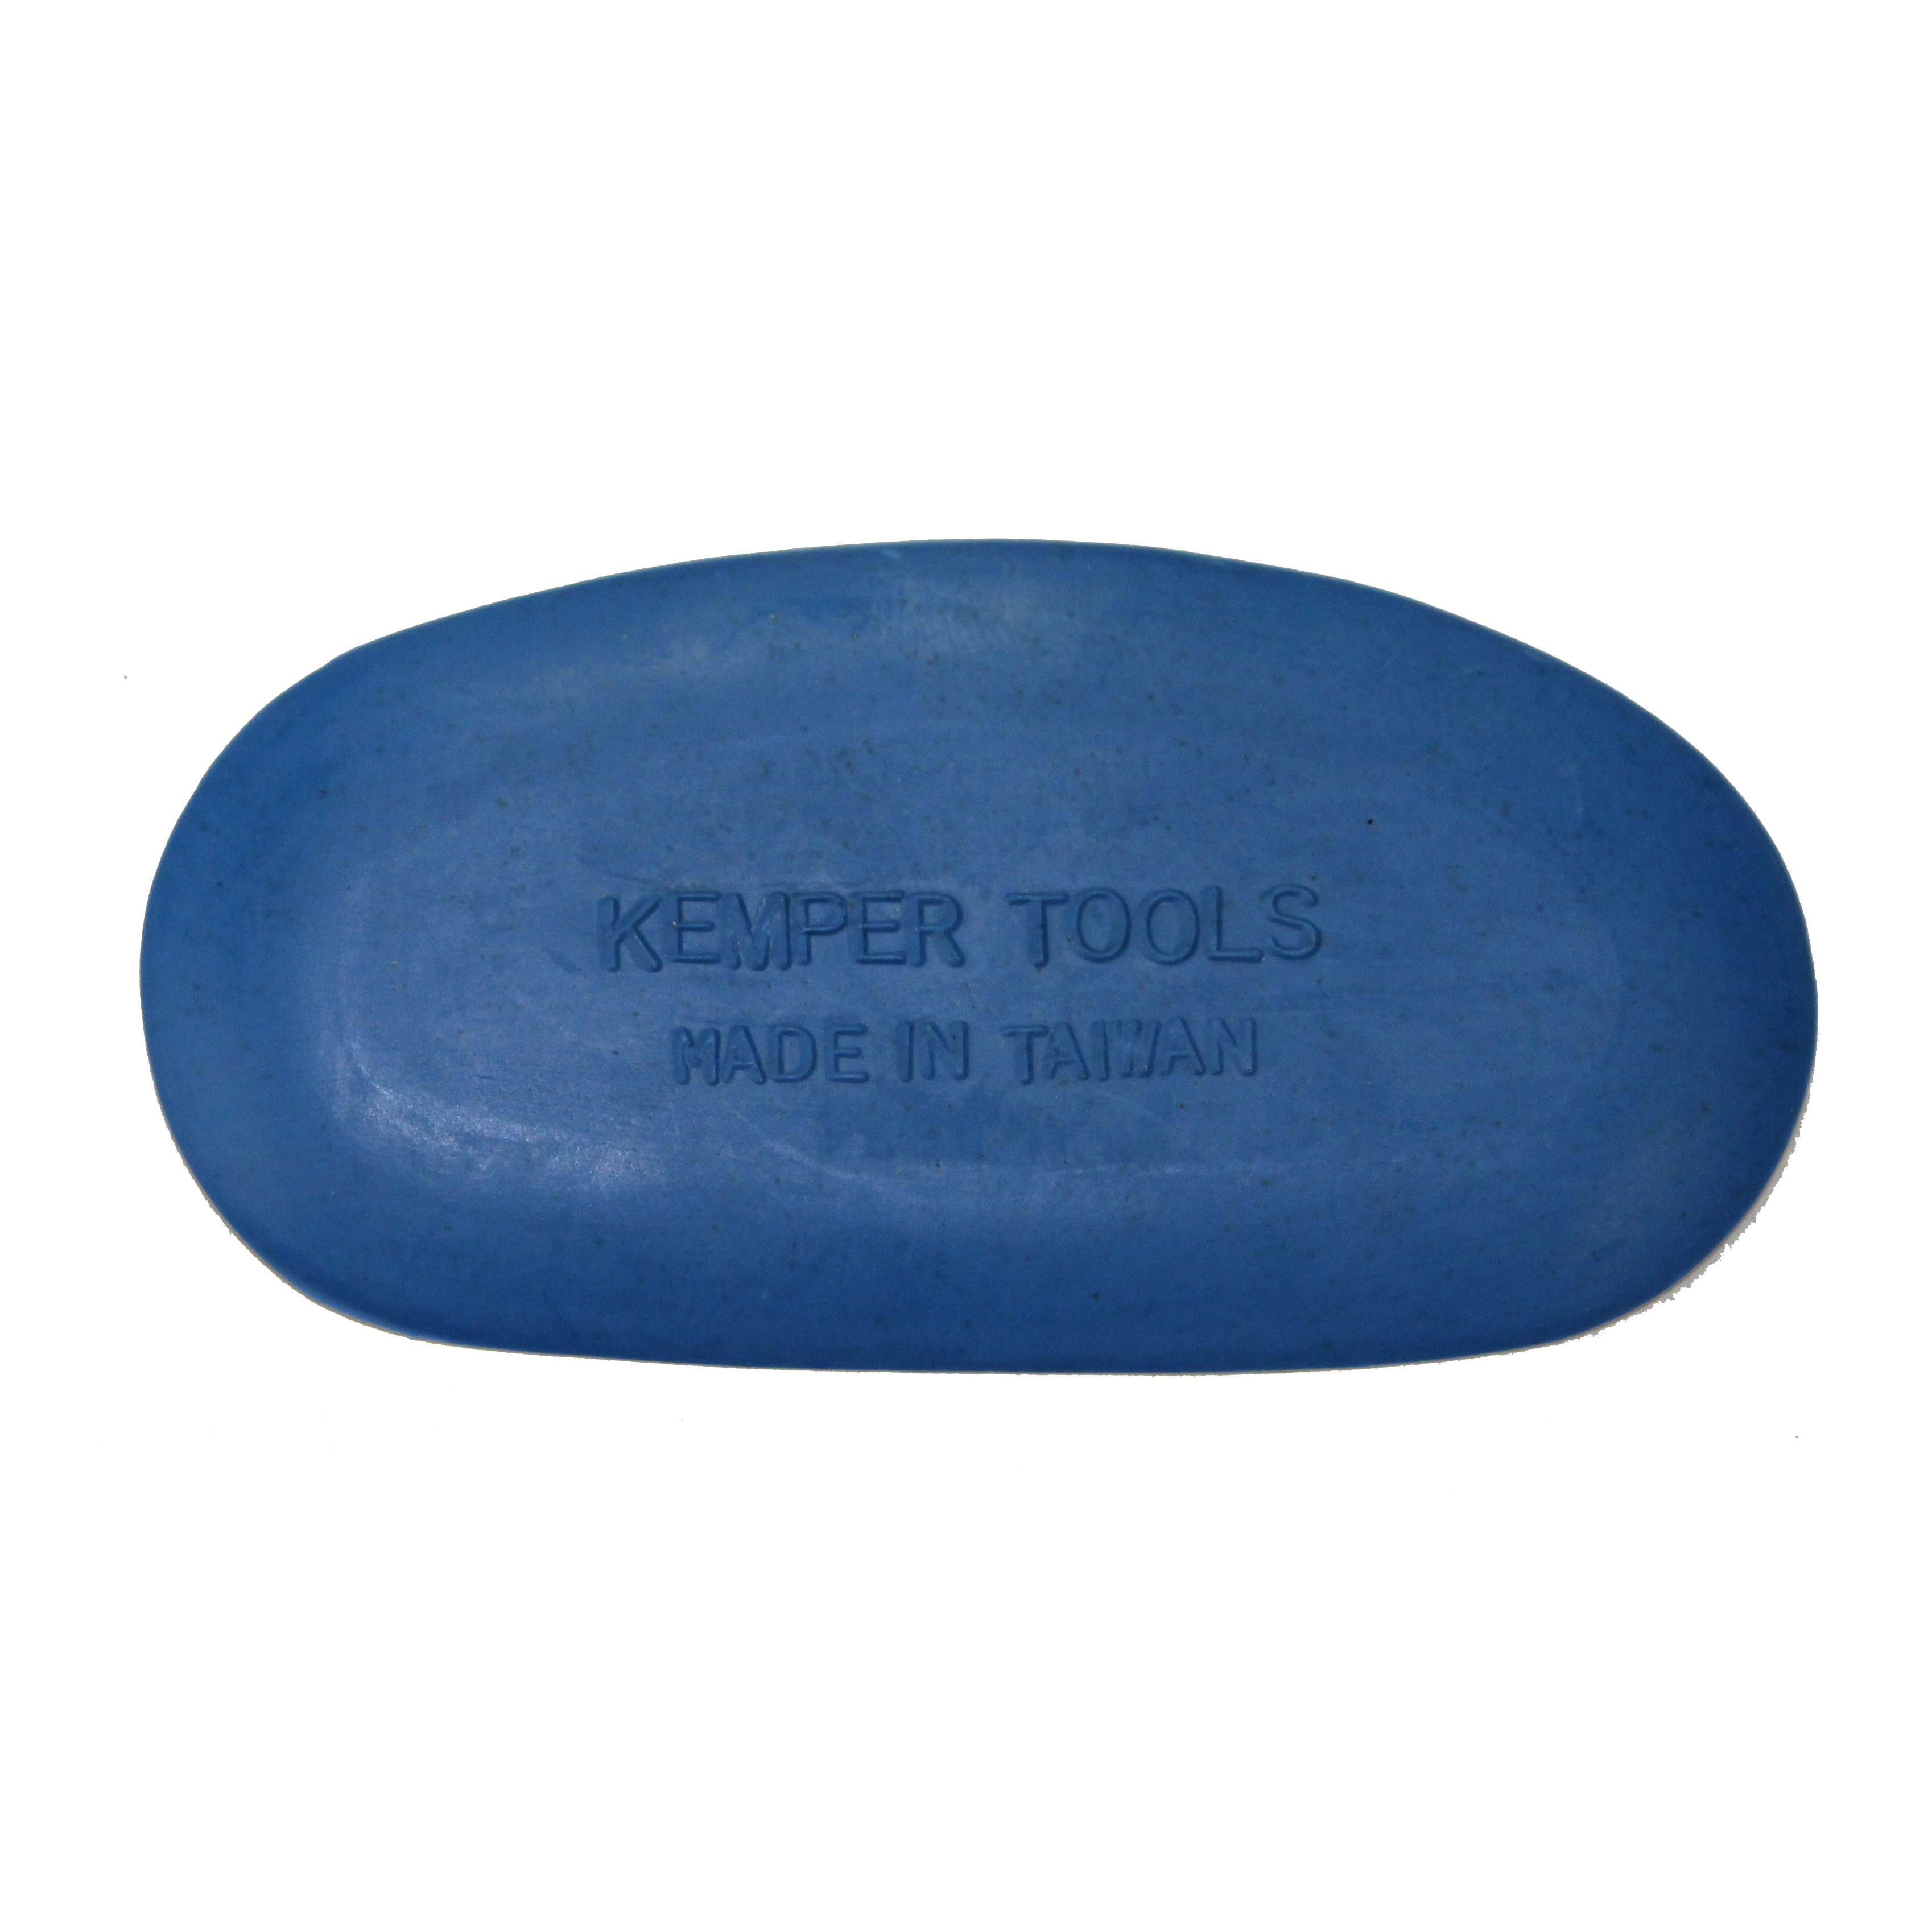 Kemper Tools Rubber Finishing Tool, 4.25", Hard